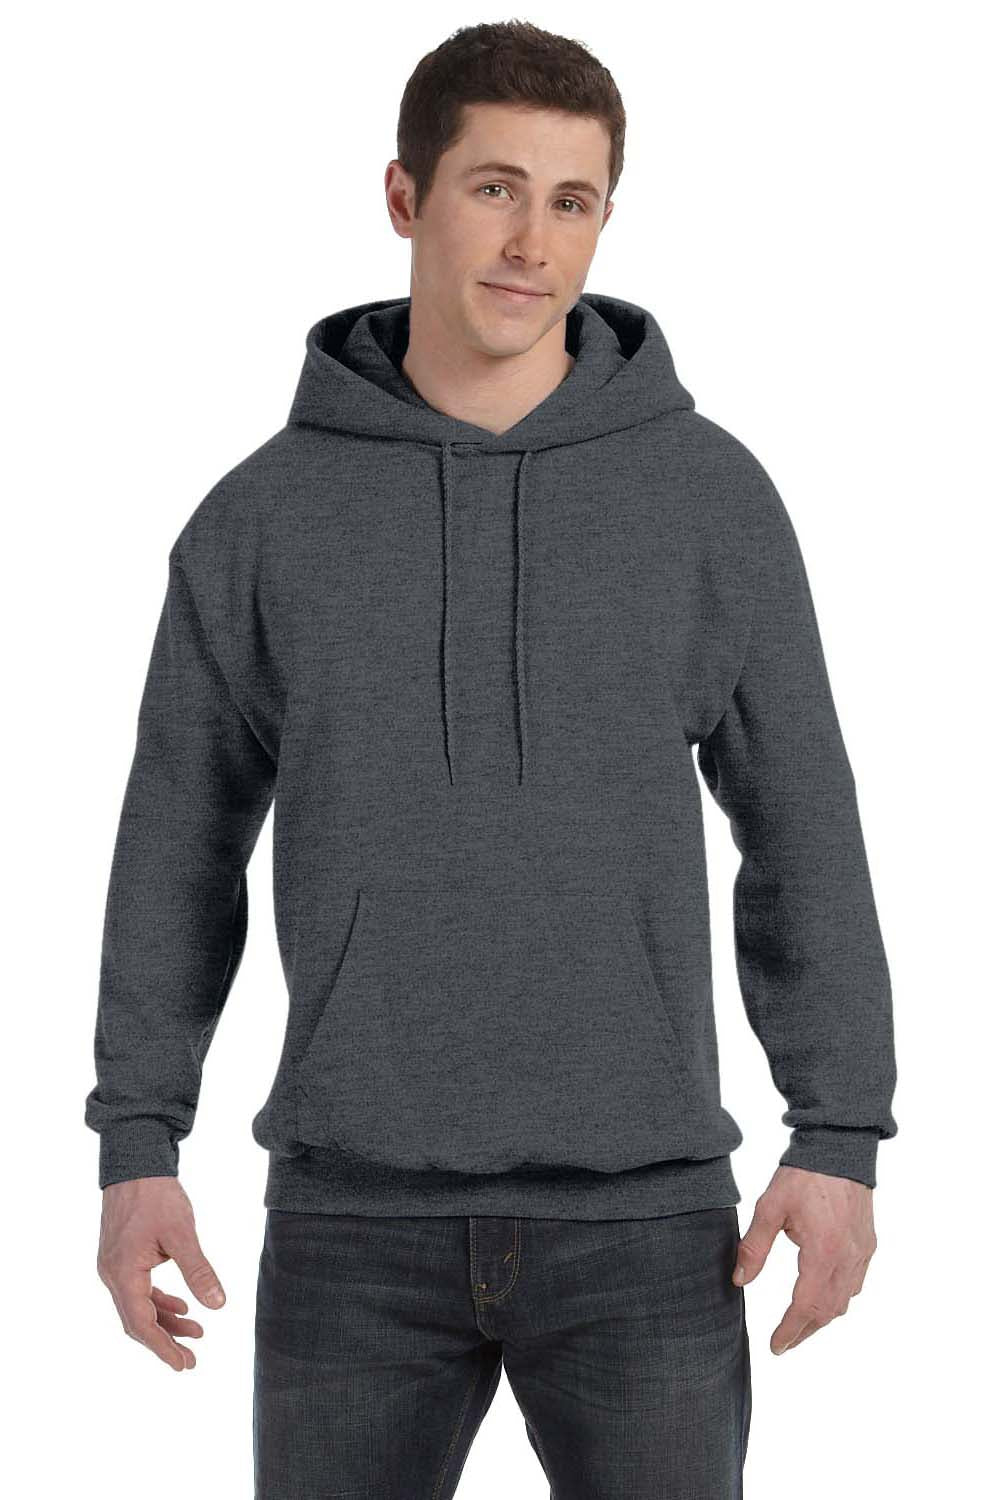 Hanes P170 Mens EcoSmart Print Pro XP Hooded Sweatshirt Hoodie Heather Charcoal Grey Front